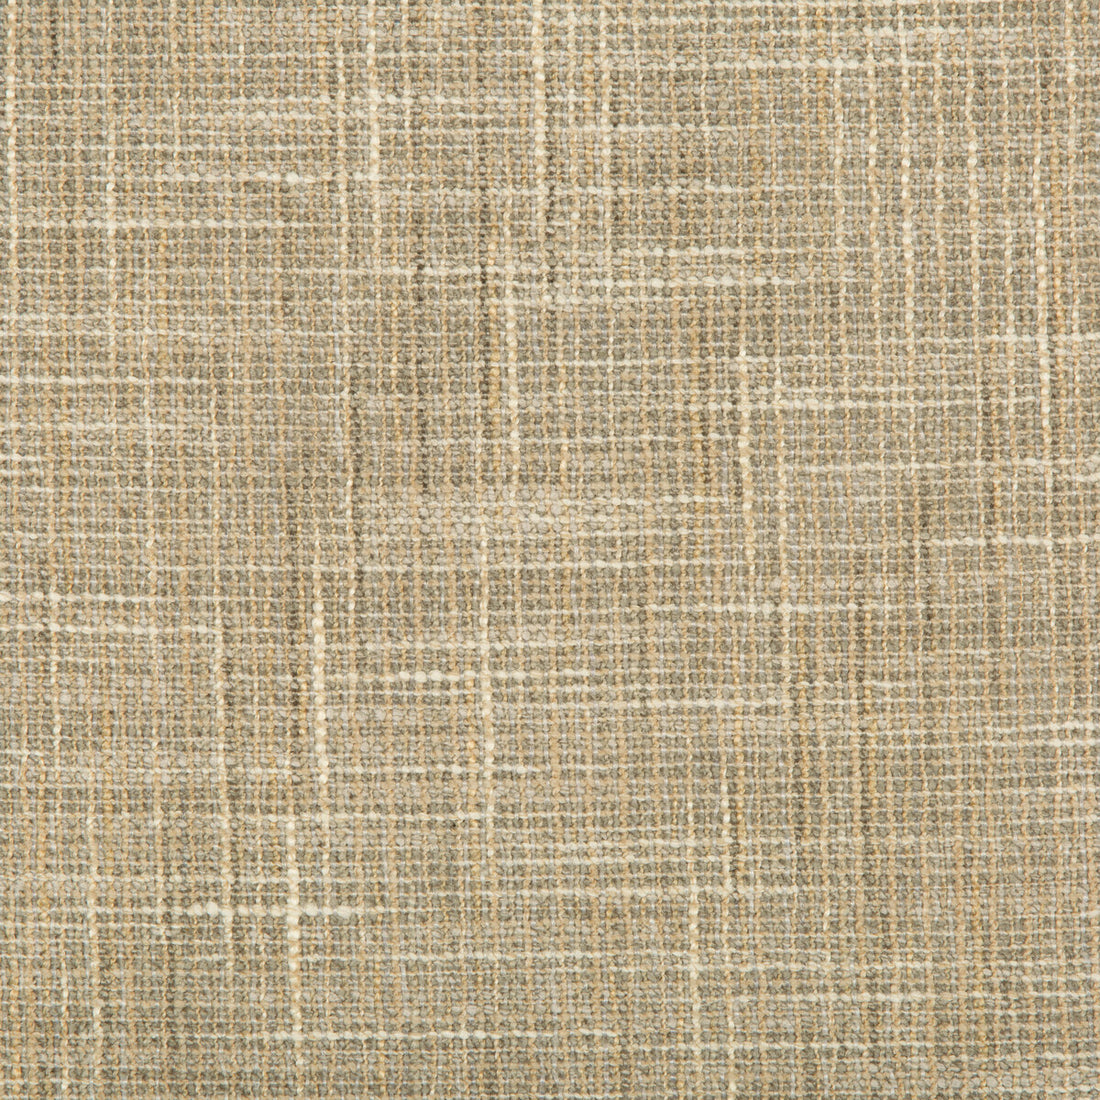 Kravet Smart fabric in 35326-16 color - pattern 35326.16.0 - by Kravet Smart in the Performance Kravetarmor collection